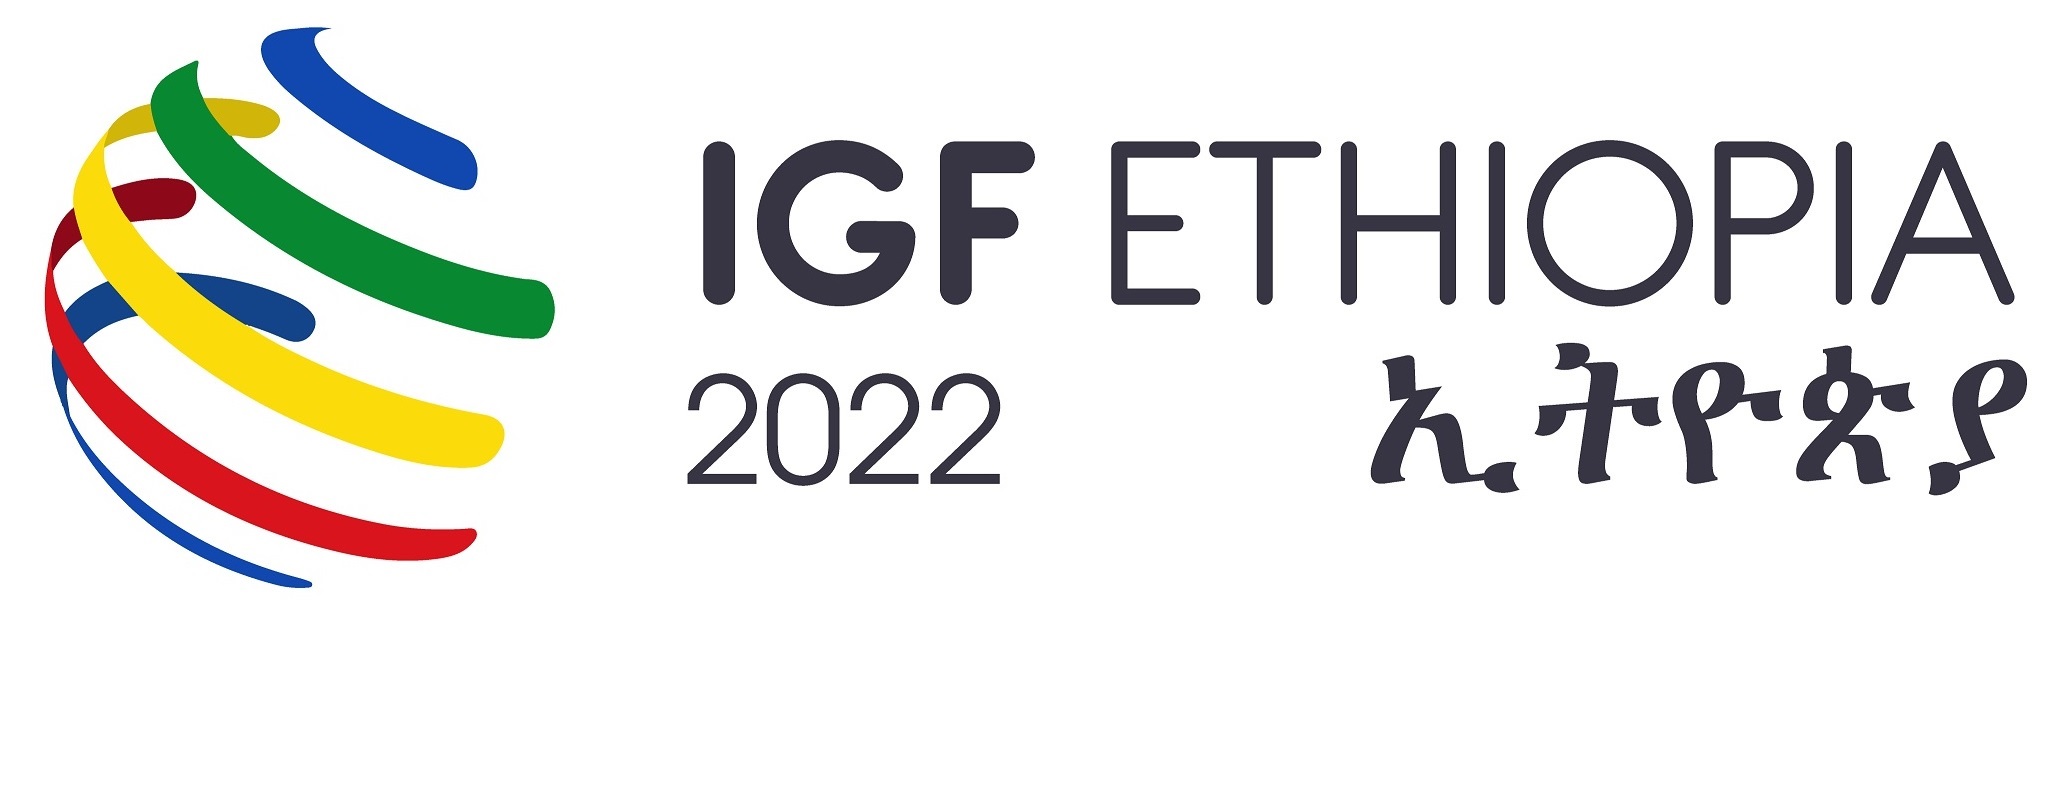 igf22 logo